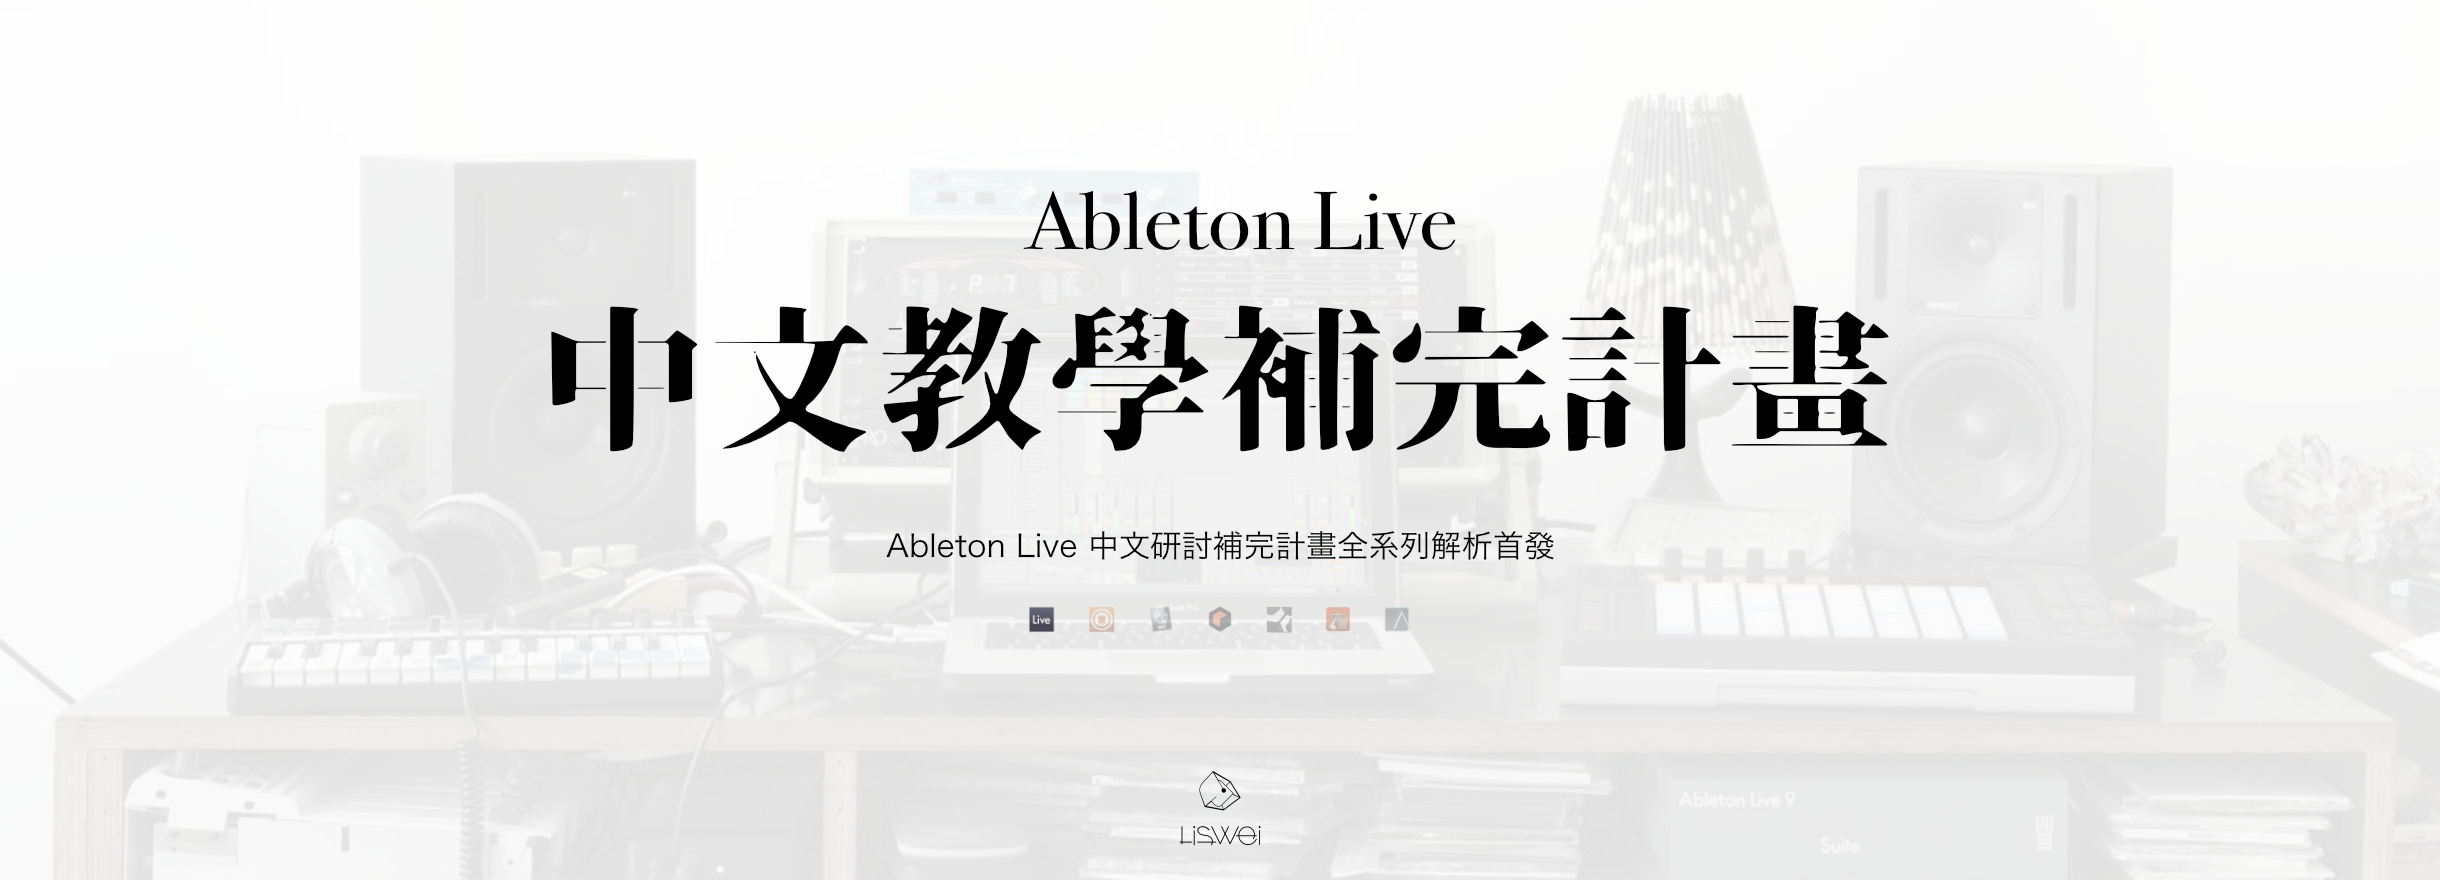 Ableton Live 中文研討補完計畫全系列解析首發